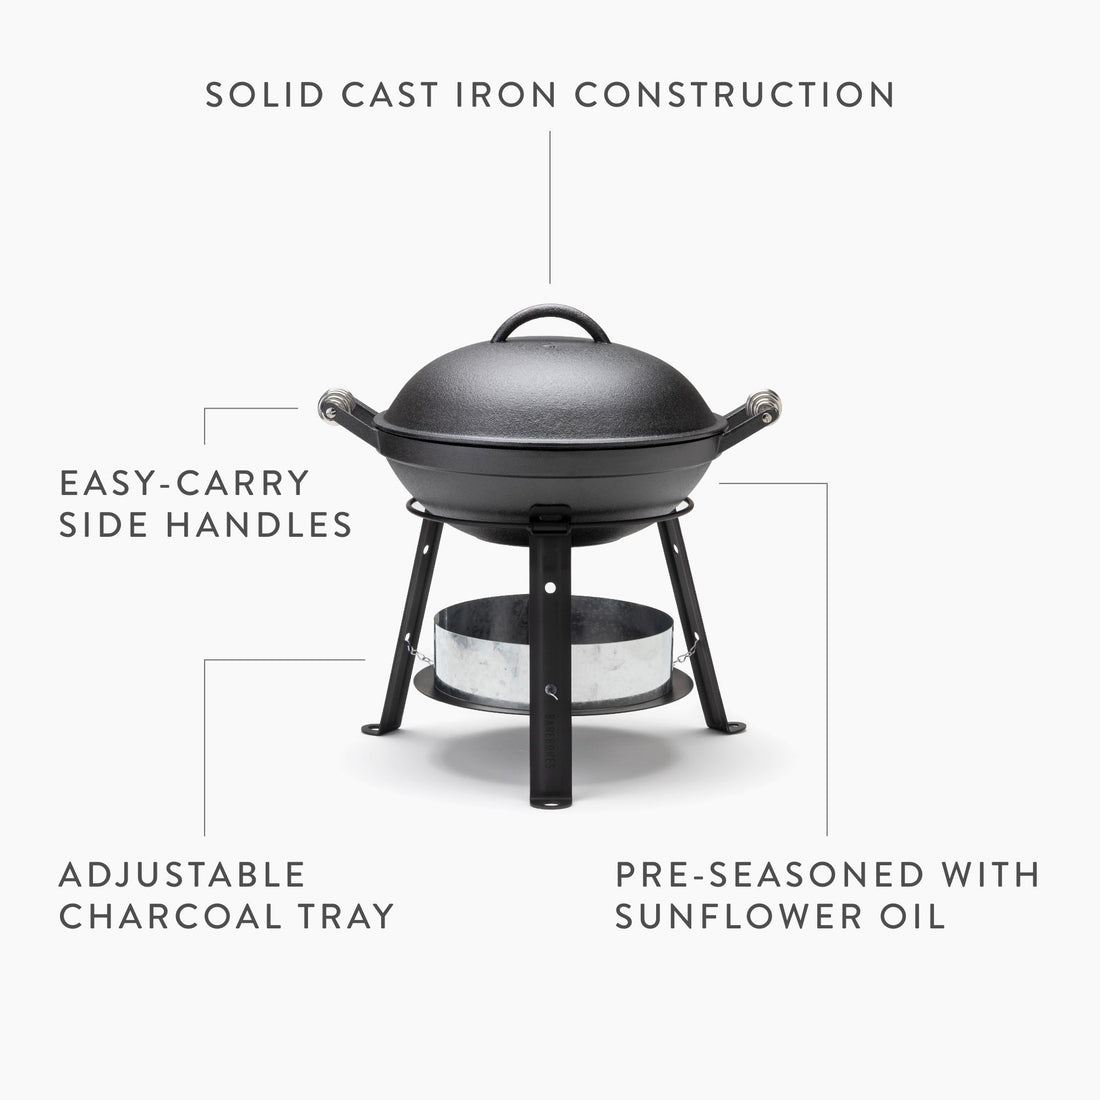 Barebones - All-in-One Cast Iron Grill